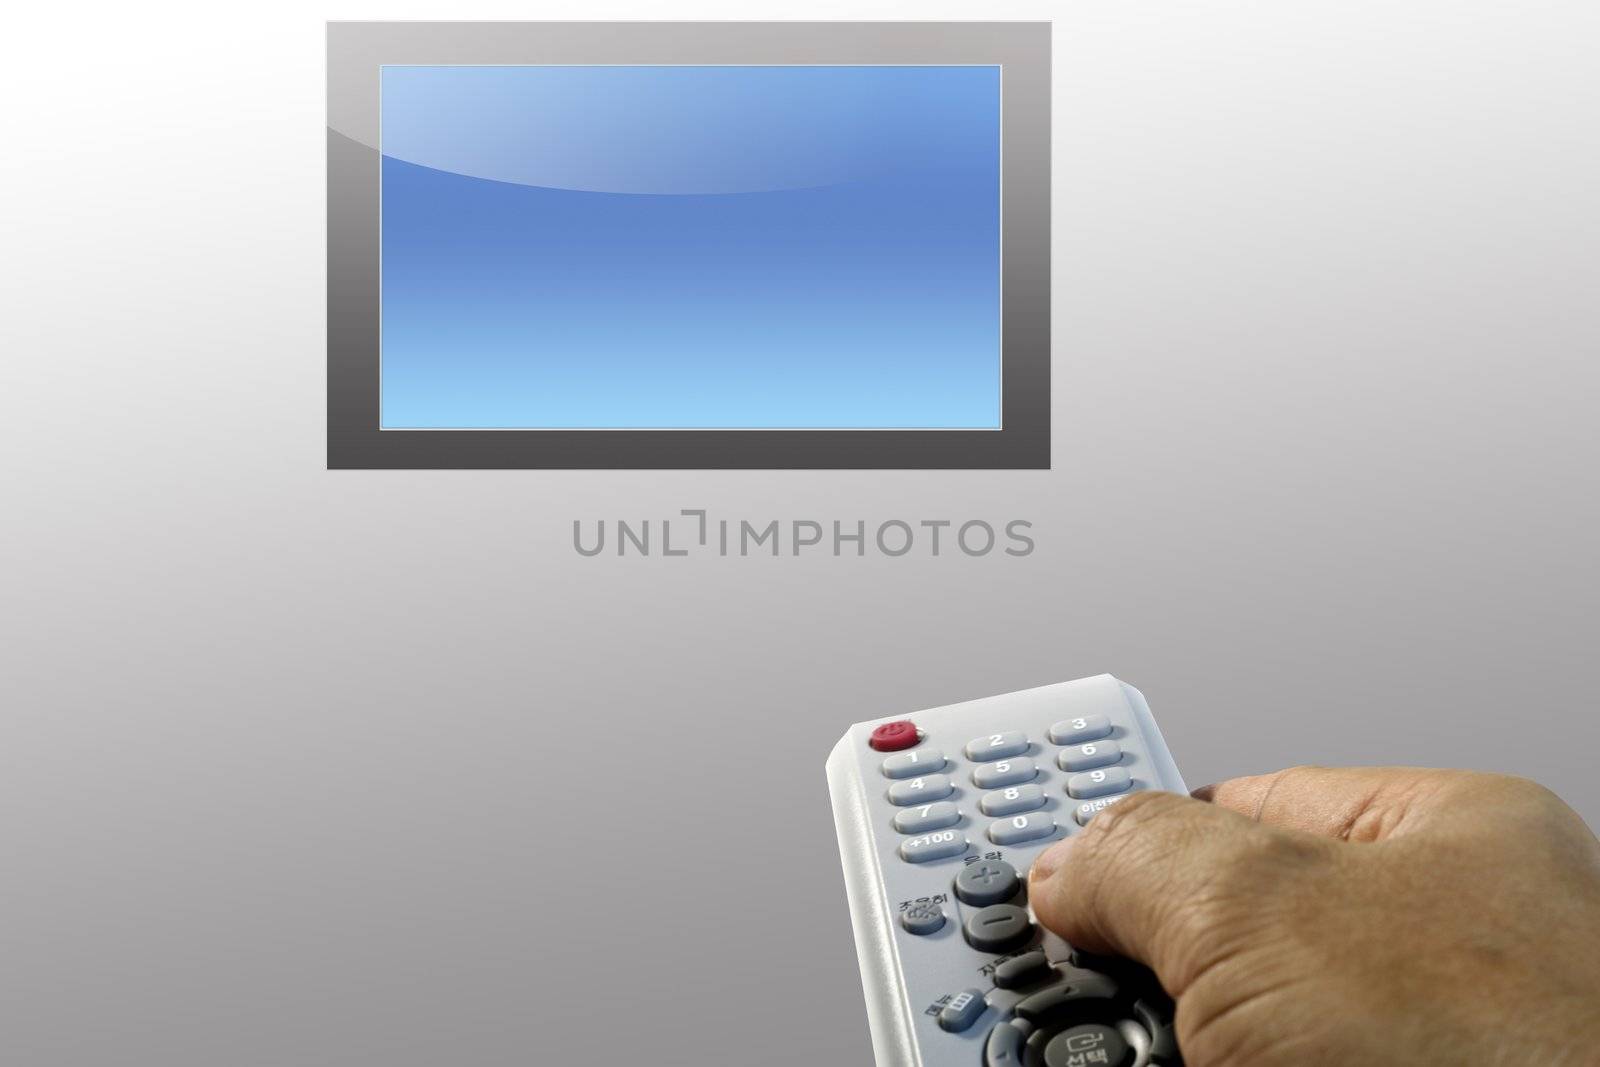 Remote Control and TV Plasma in Digital format